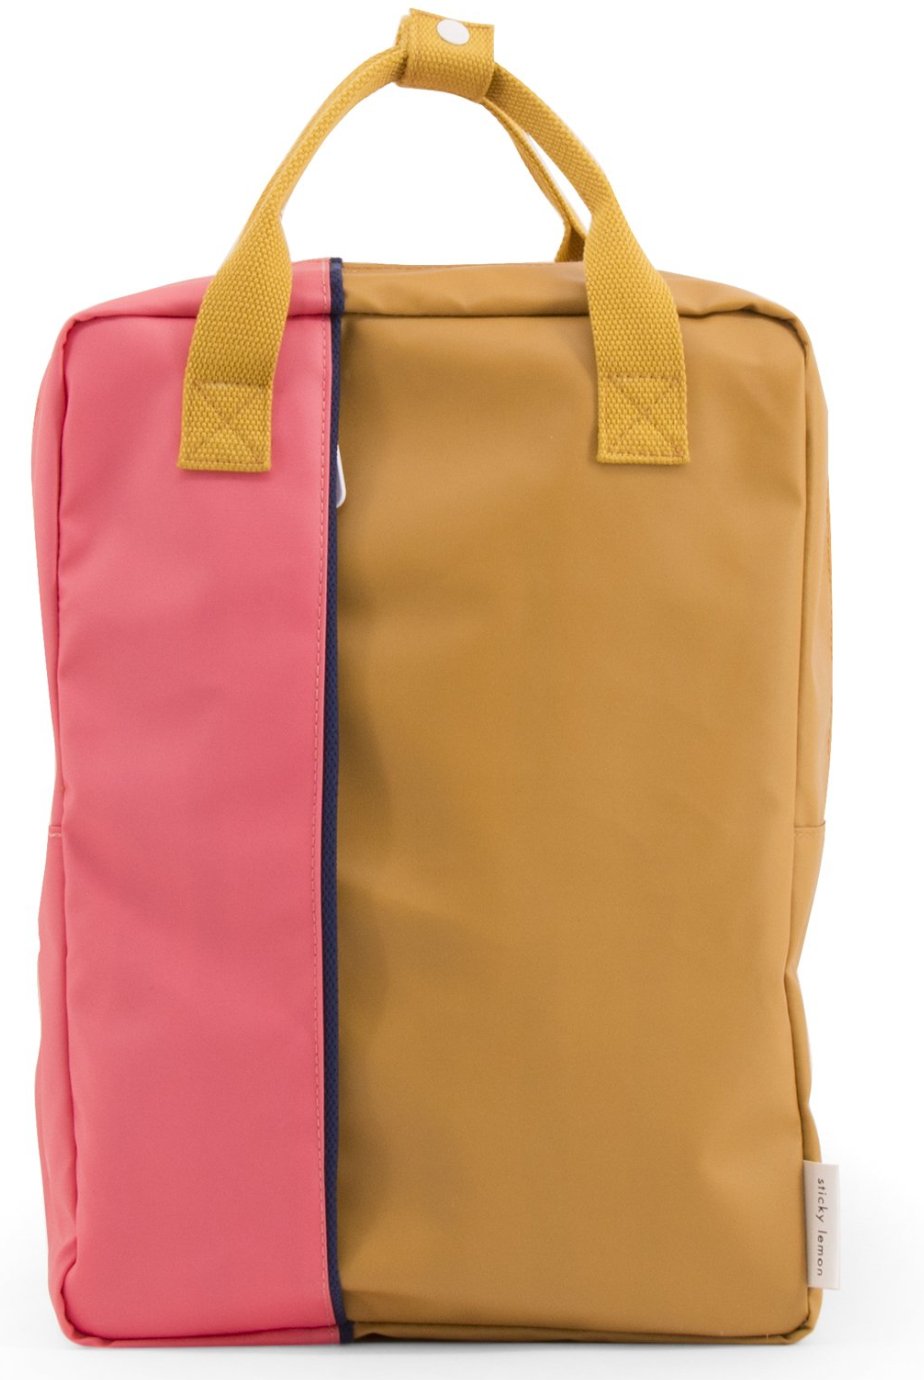 Large backpack vertical - powder caramel fudge / watermelon pink